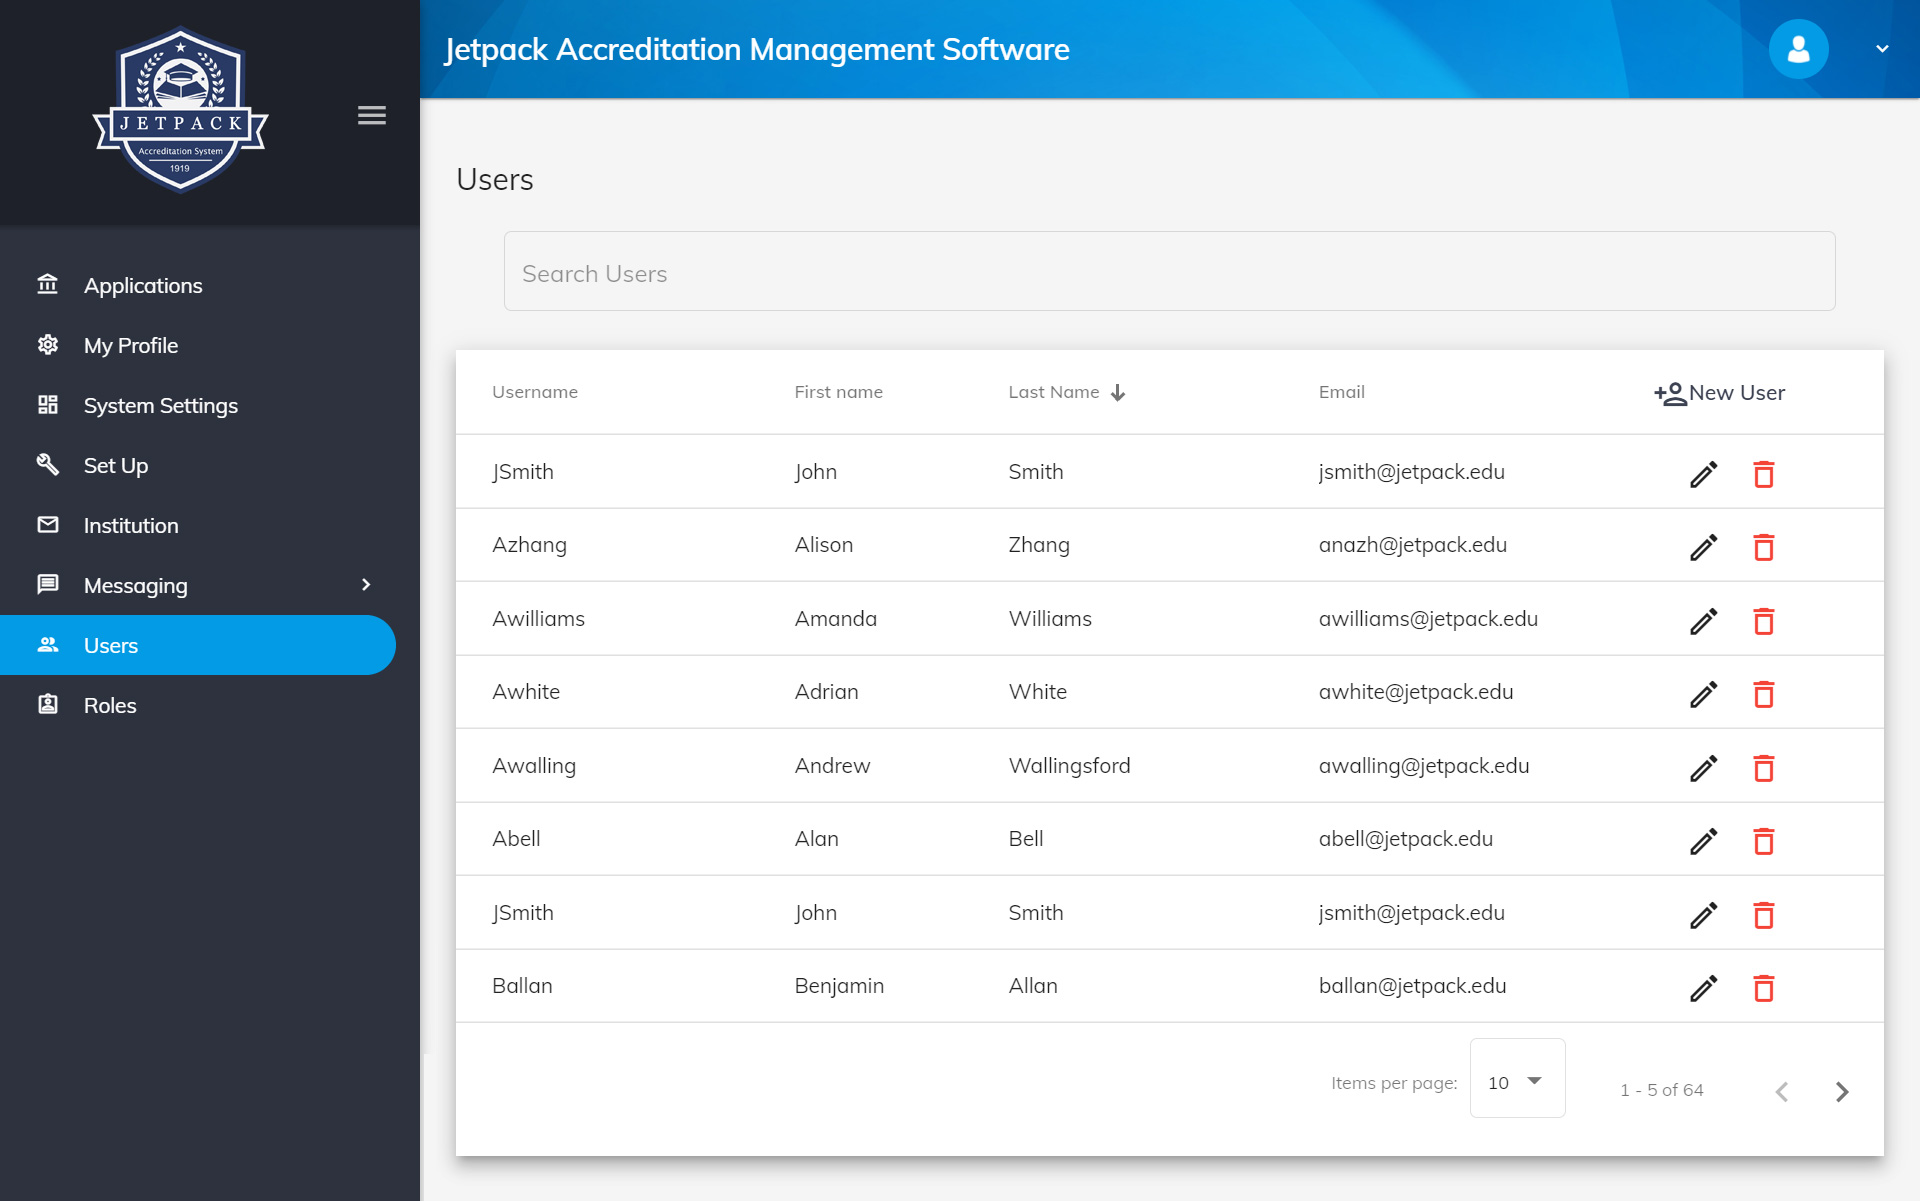 Jetpack Accreditation Management configure role-based permissions